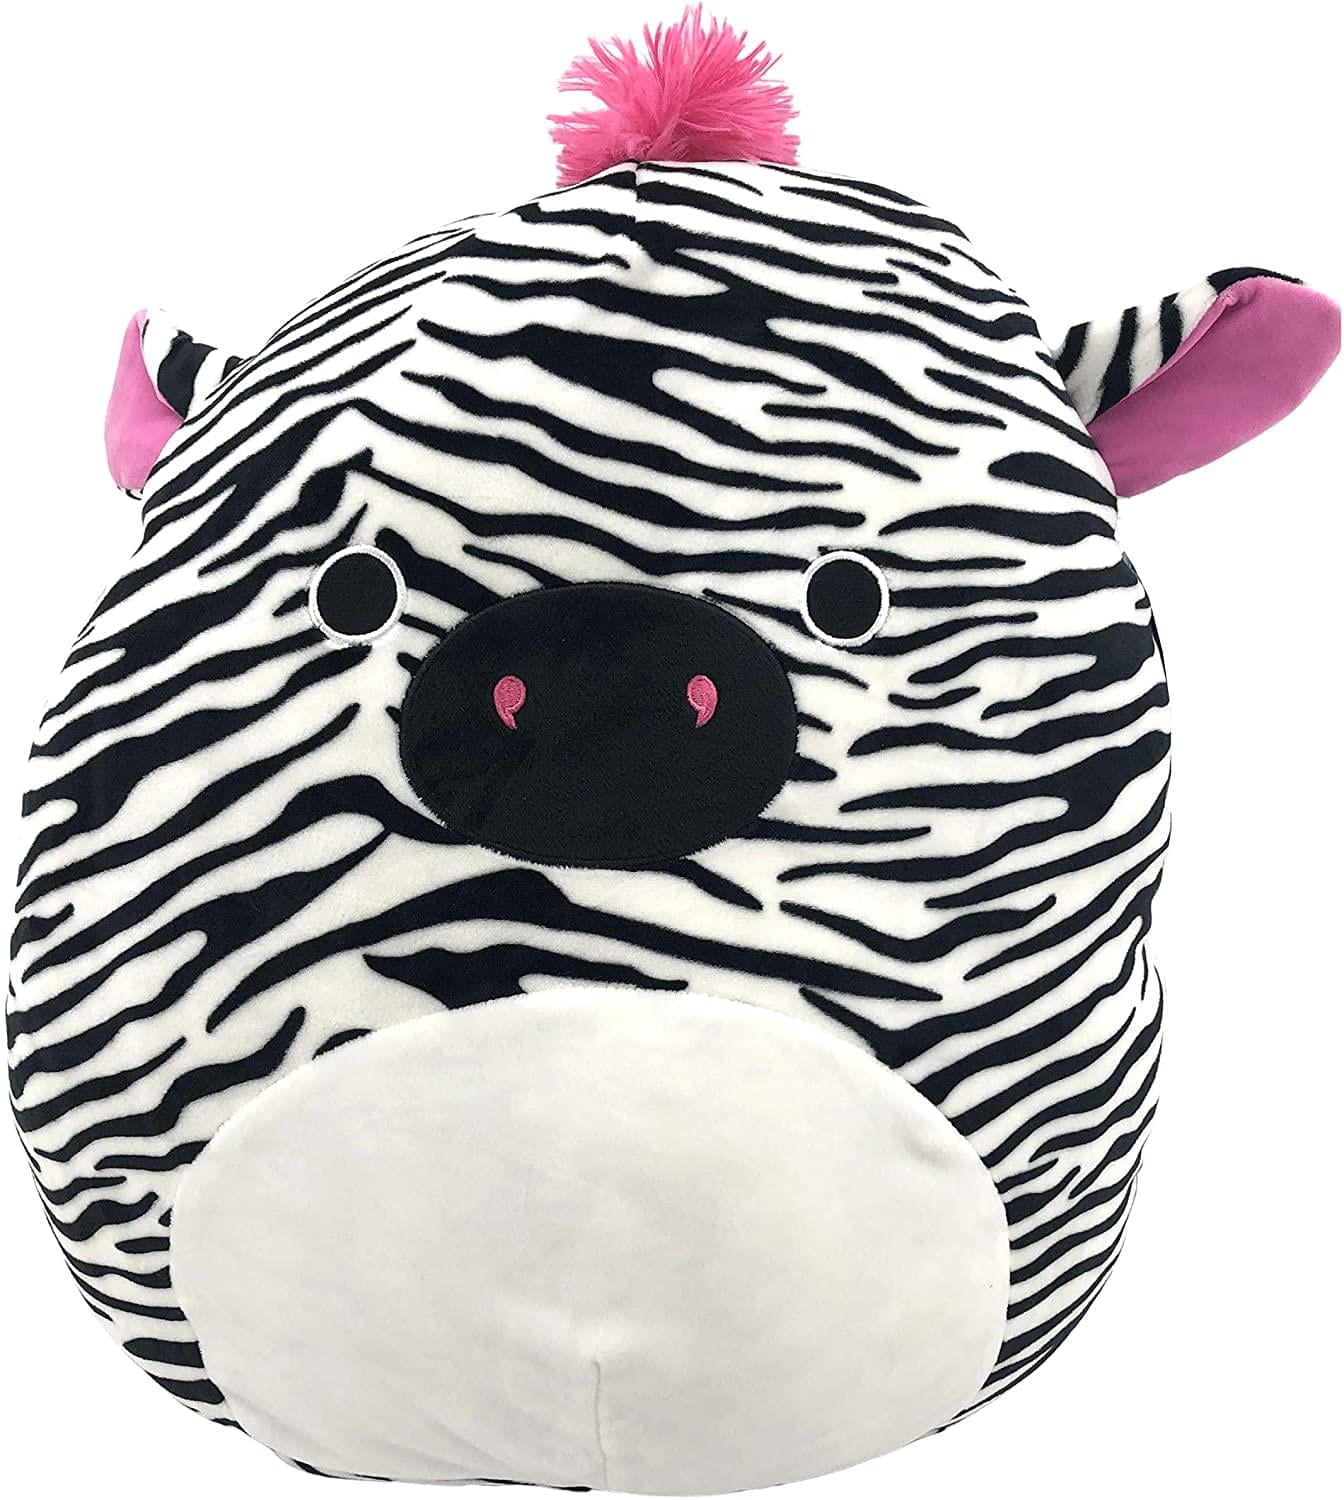 Squishmallows 8" Freddie zebra soft plush stuffed animal Valentines heart pink 